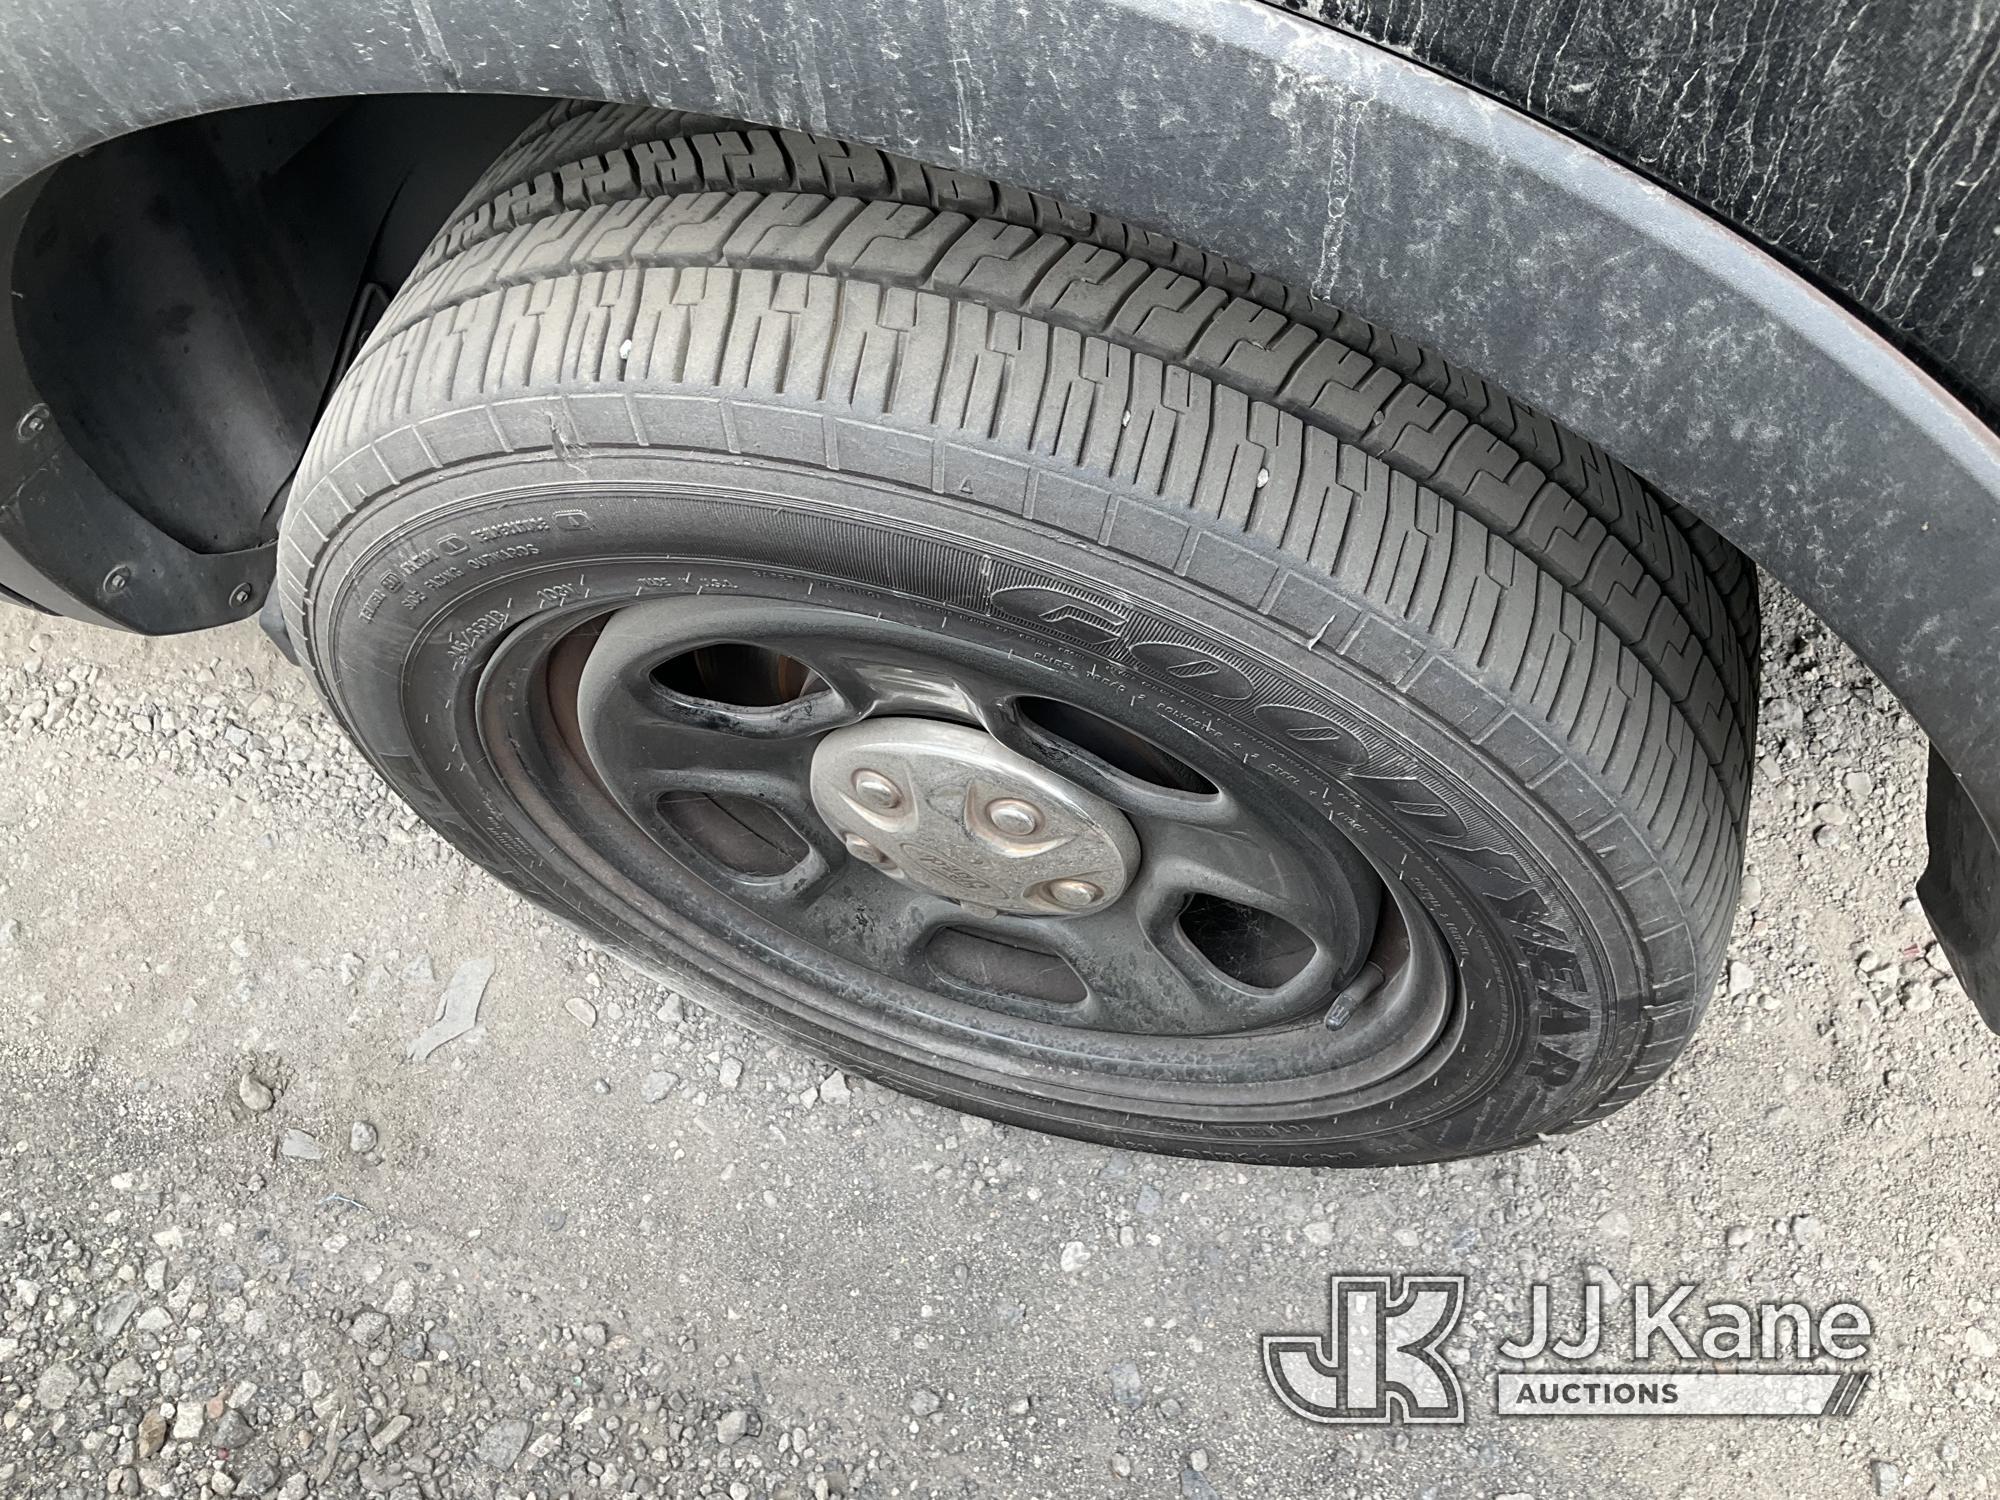 (Jurupa Valley, CA) 2014 Ford Explorer 4-Door Sport Utility Vehicle Not Running , No Key, Wrecked ,